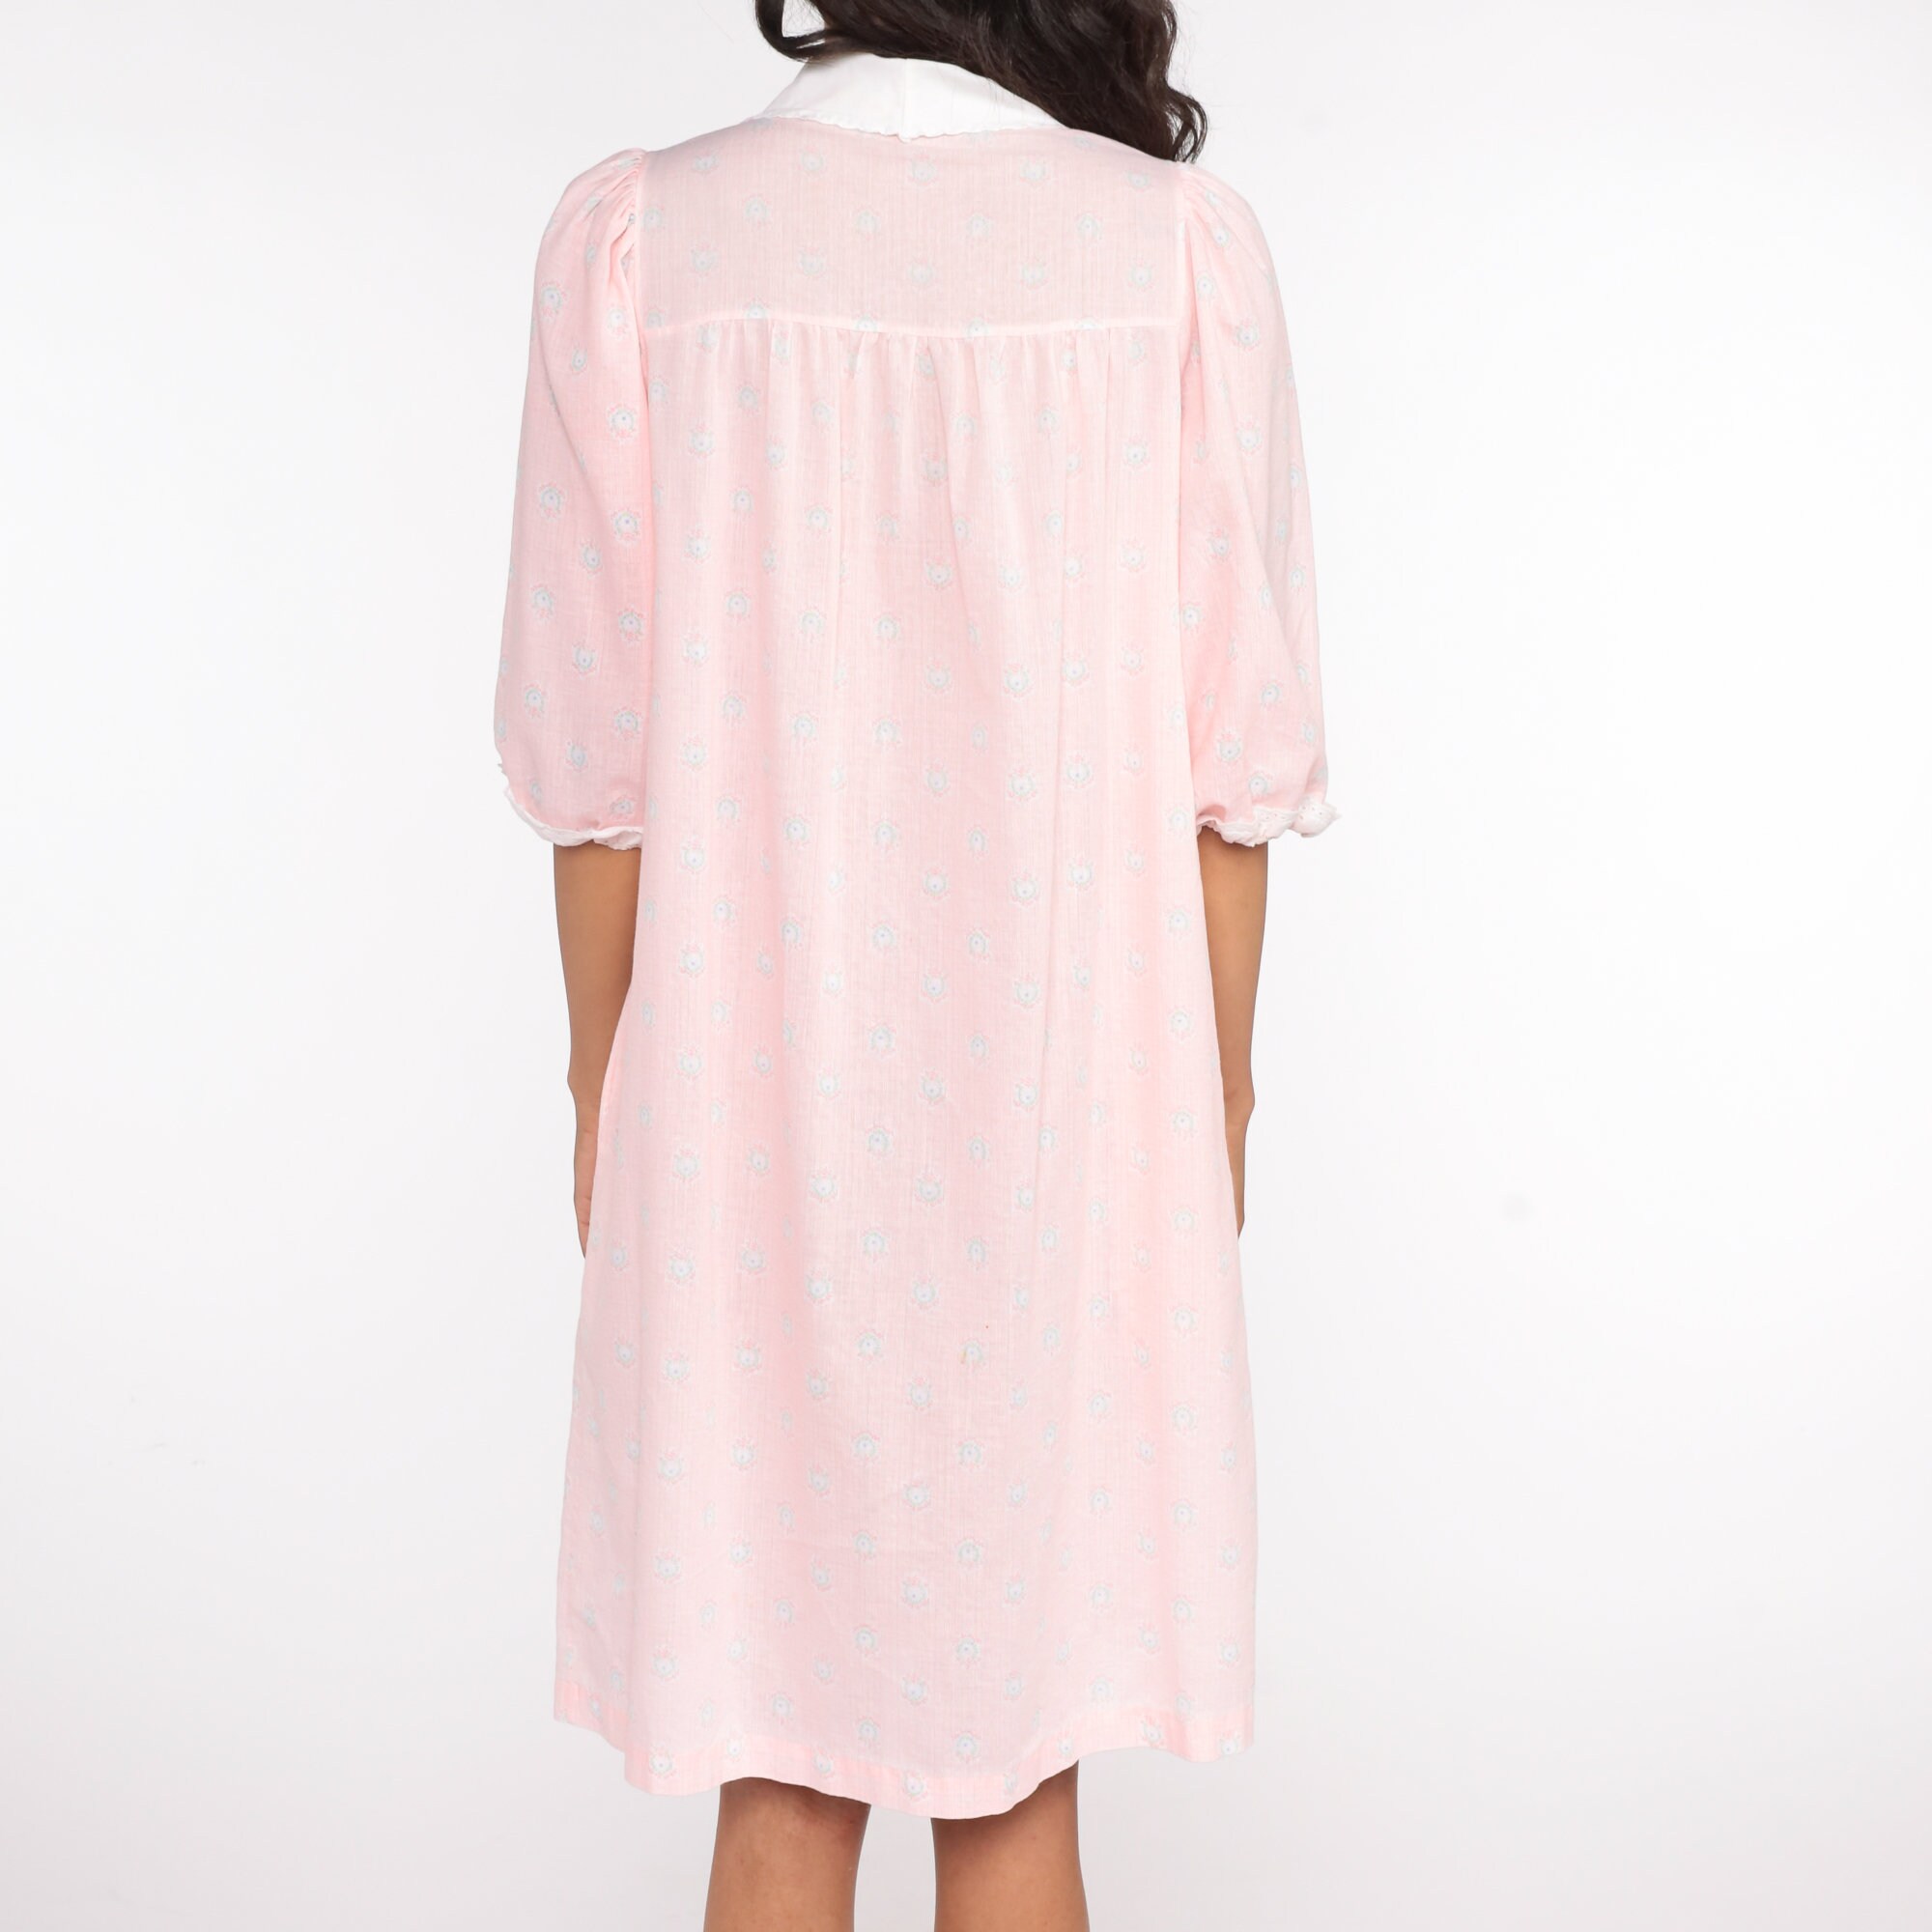 Floral Nightgown Pajama Dress 80s Puff Sleeve Nightie Baby Pink Midi ...